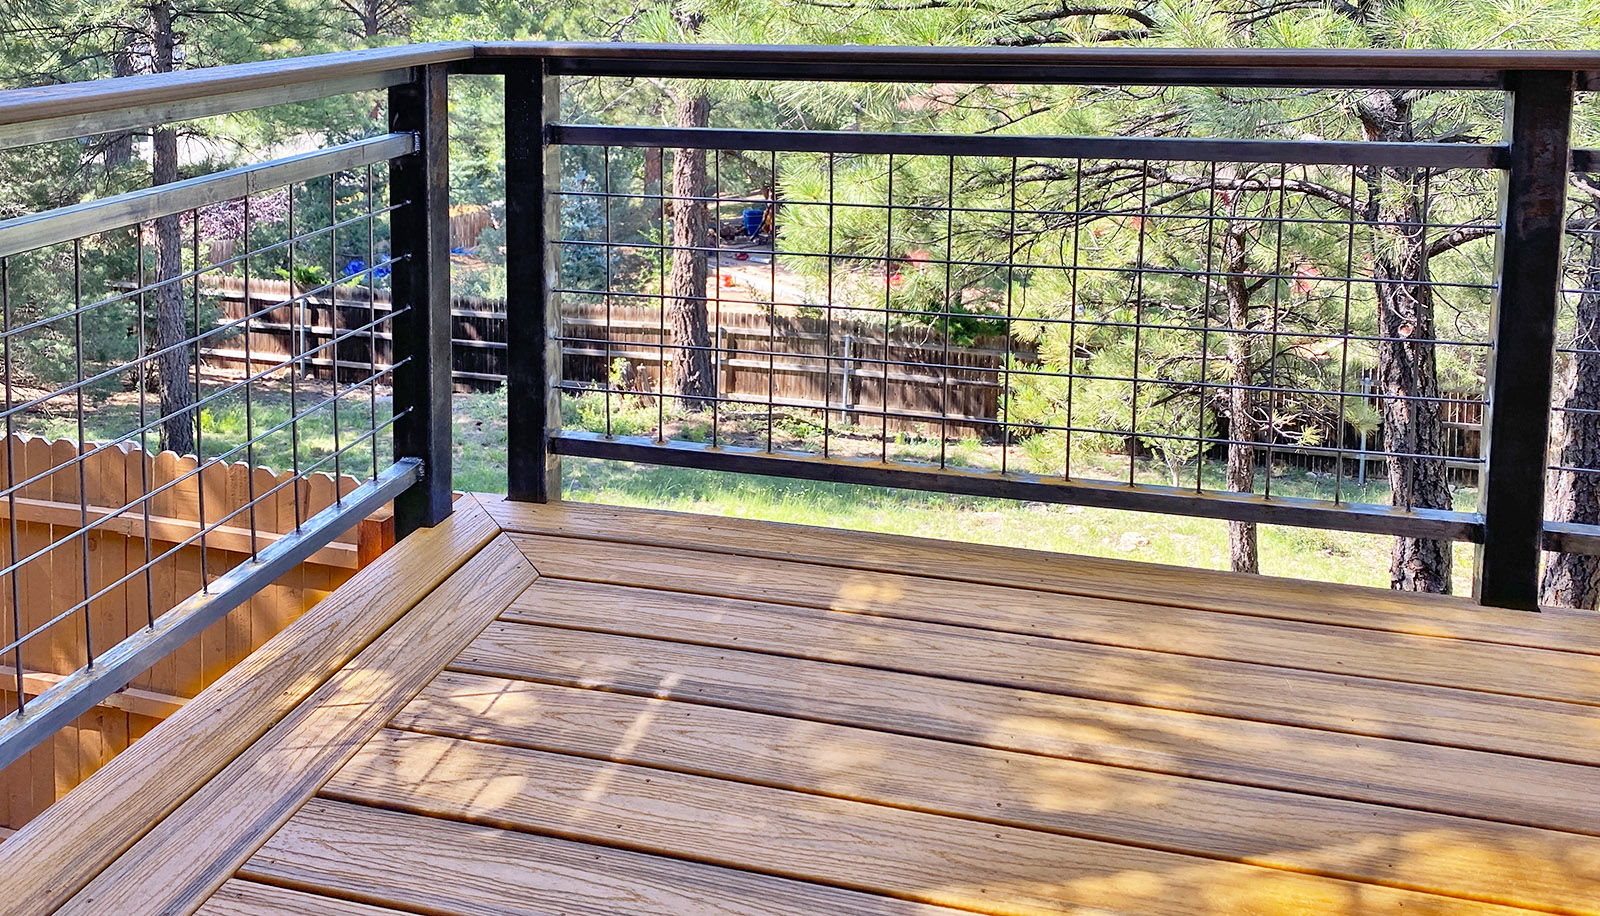 Trex deck with custom welded guardrail.  Decking color is Havana Gold